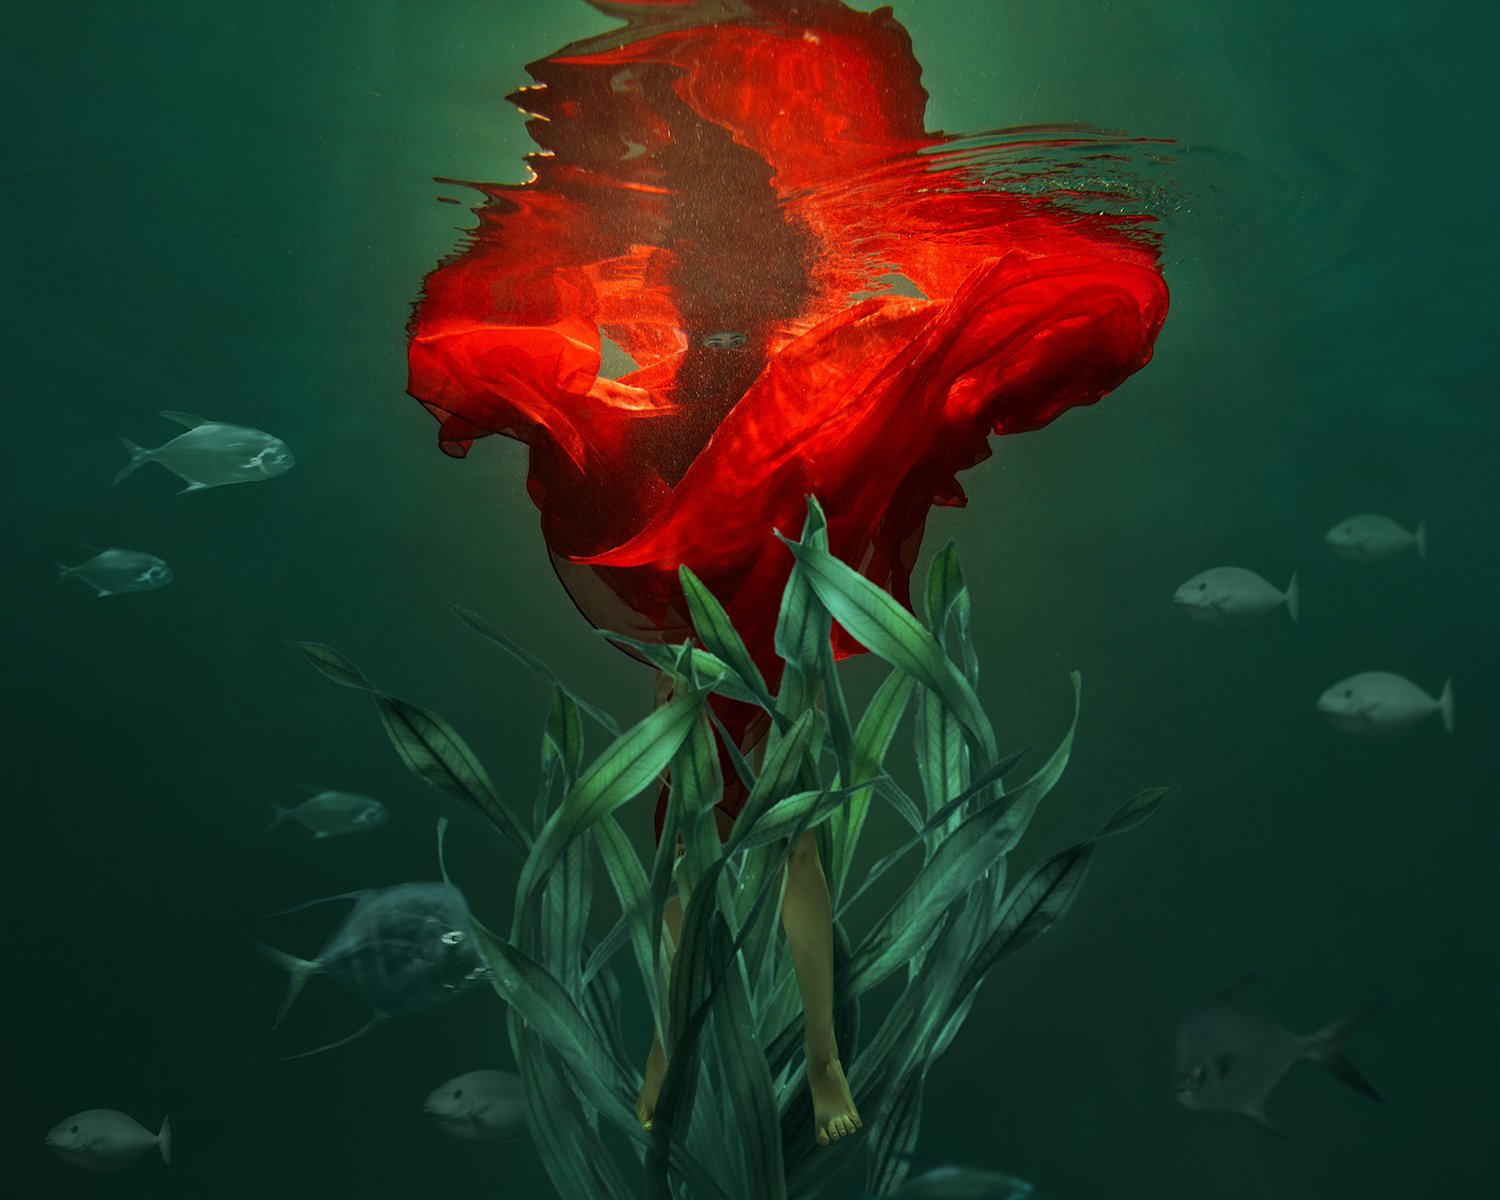 fine art, portrait, under water, green, red, flower, портрет, файн арт, красный цветок, вода, под водой, Марина Семёхина